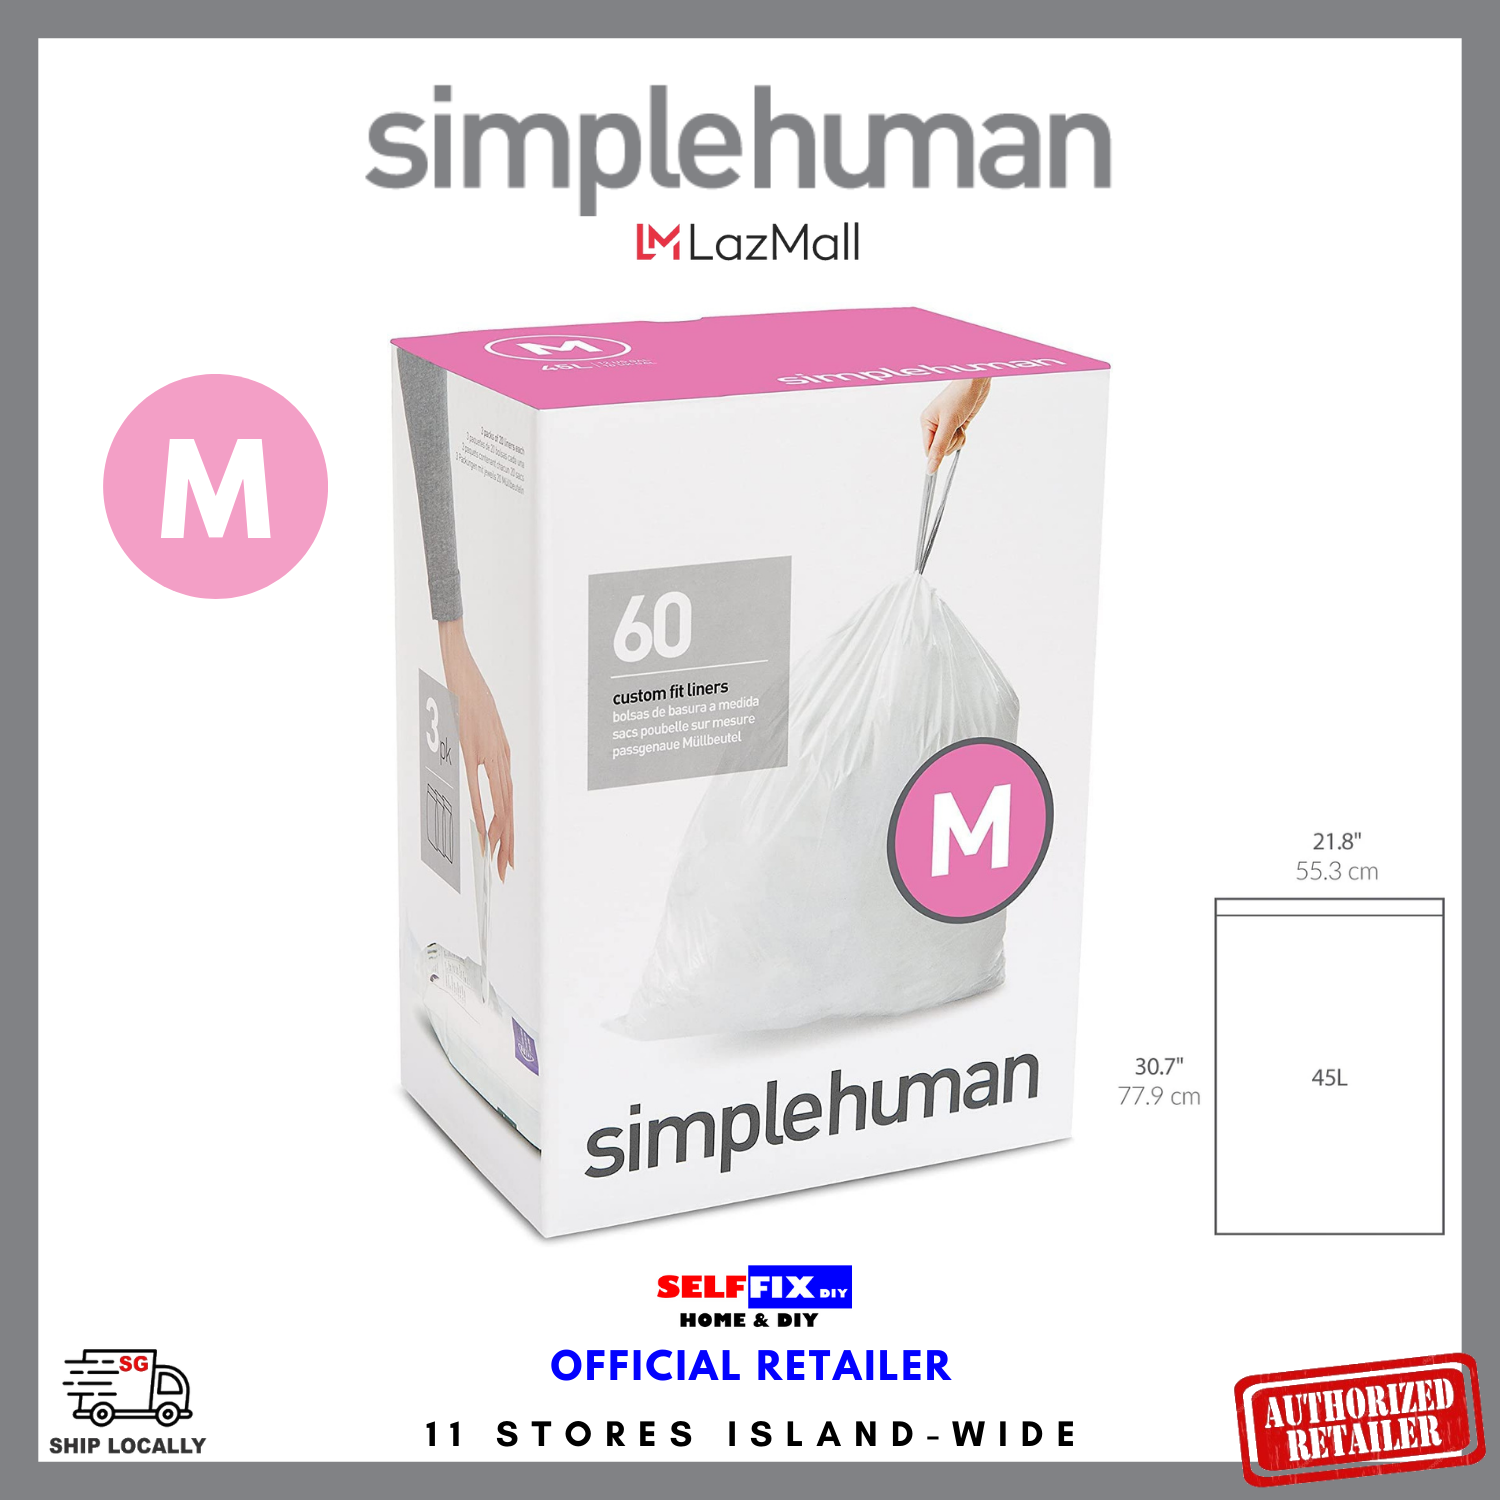 simplehuman code M custom fit liners